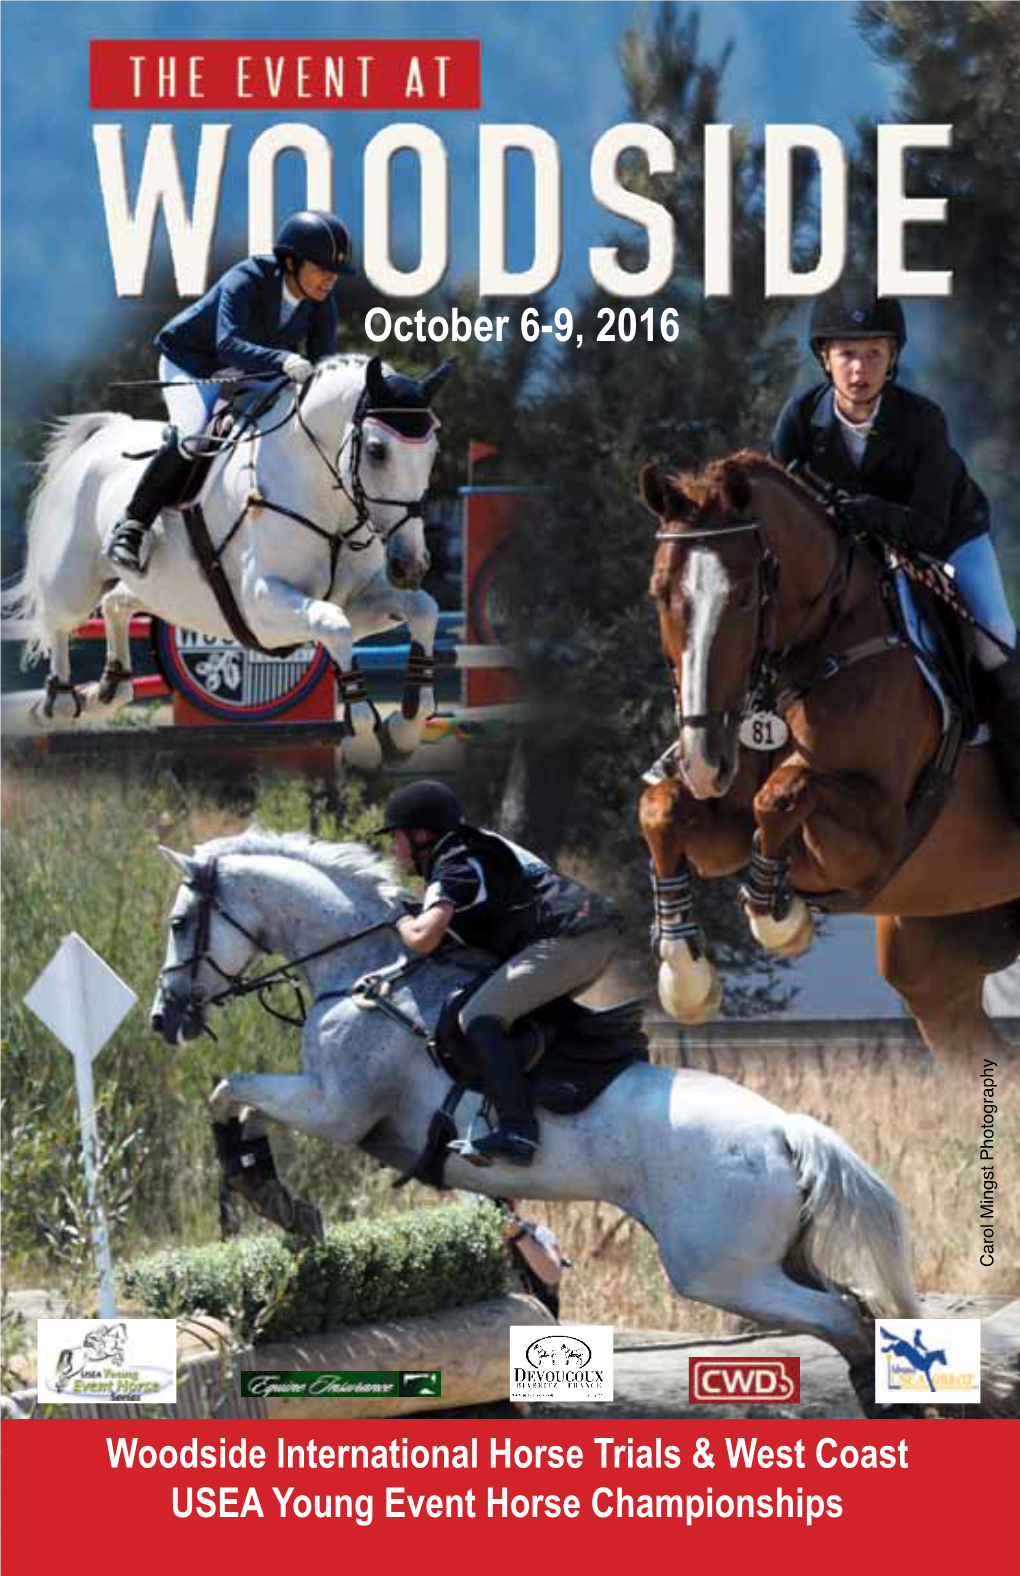 Woodside International Horse Trials October 6-9, 2016 Officials FEI GROUND JURY Kellie Towers, CAN, President; Bobby Stevenson, USA